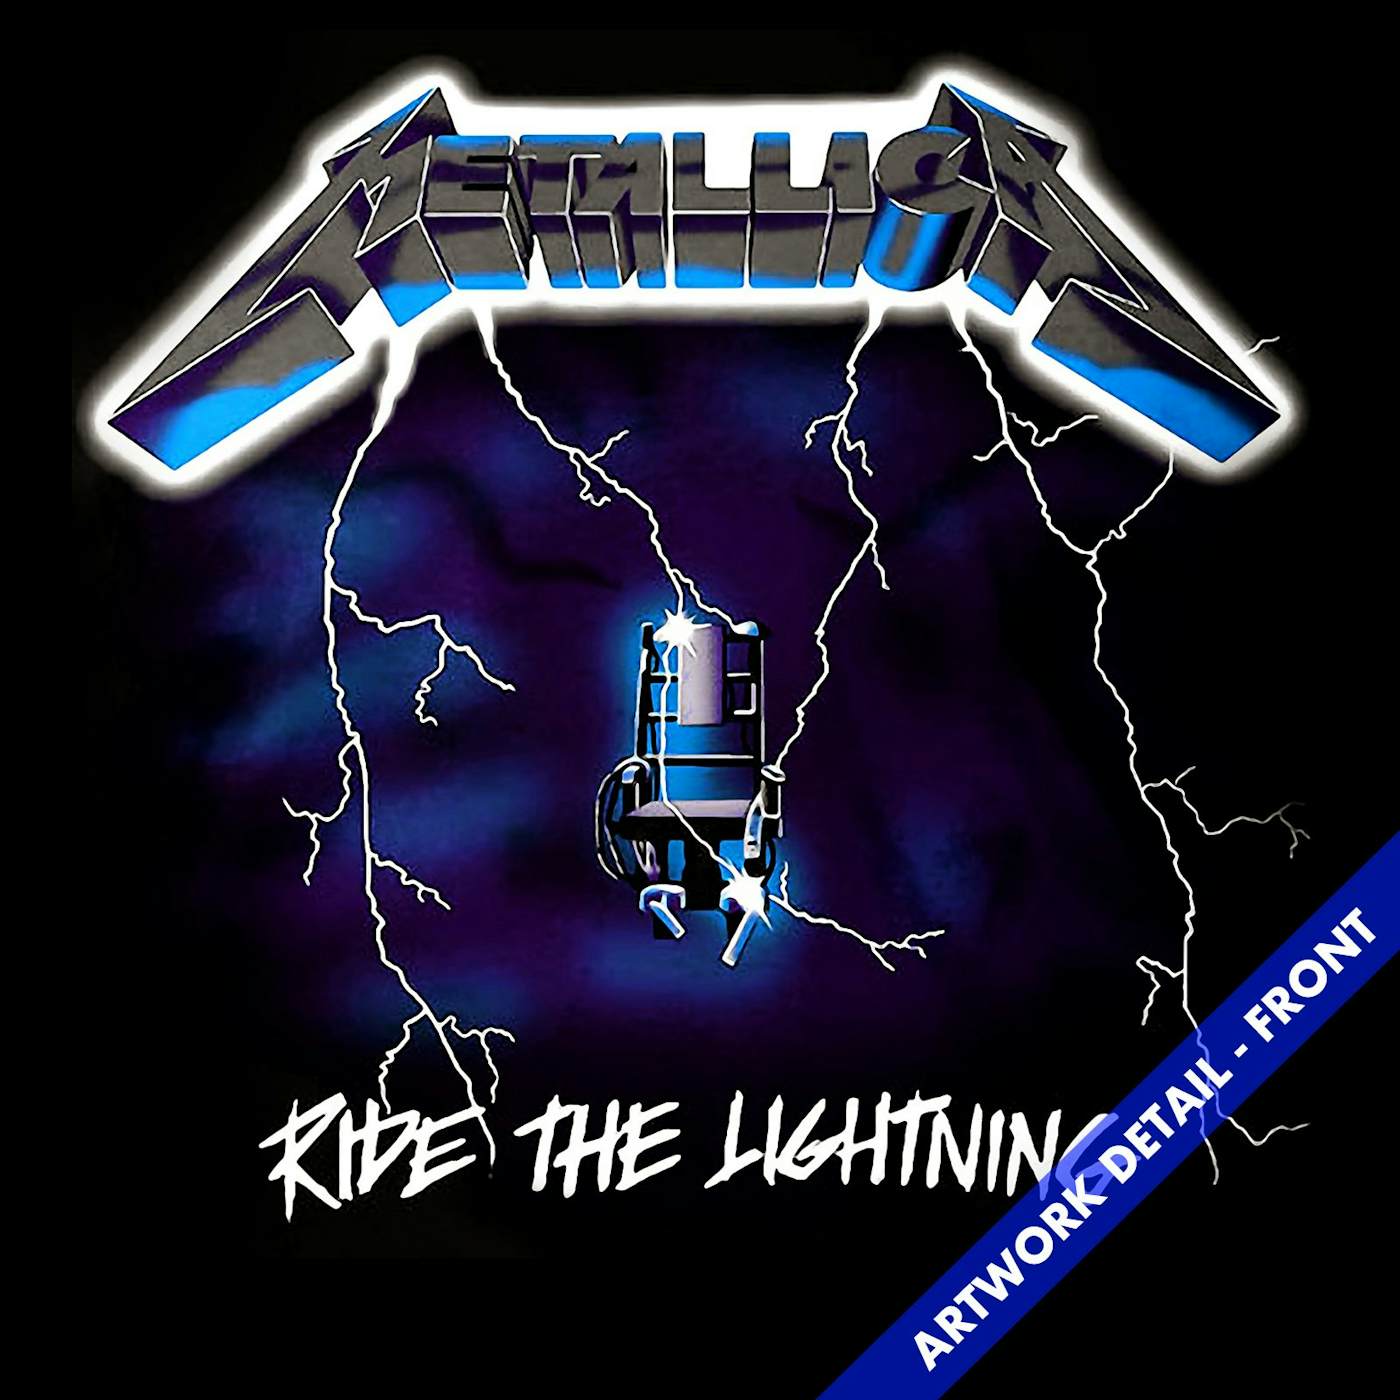 Metallica - Ride The Lightning (Deluxe Remaster)